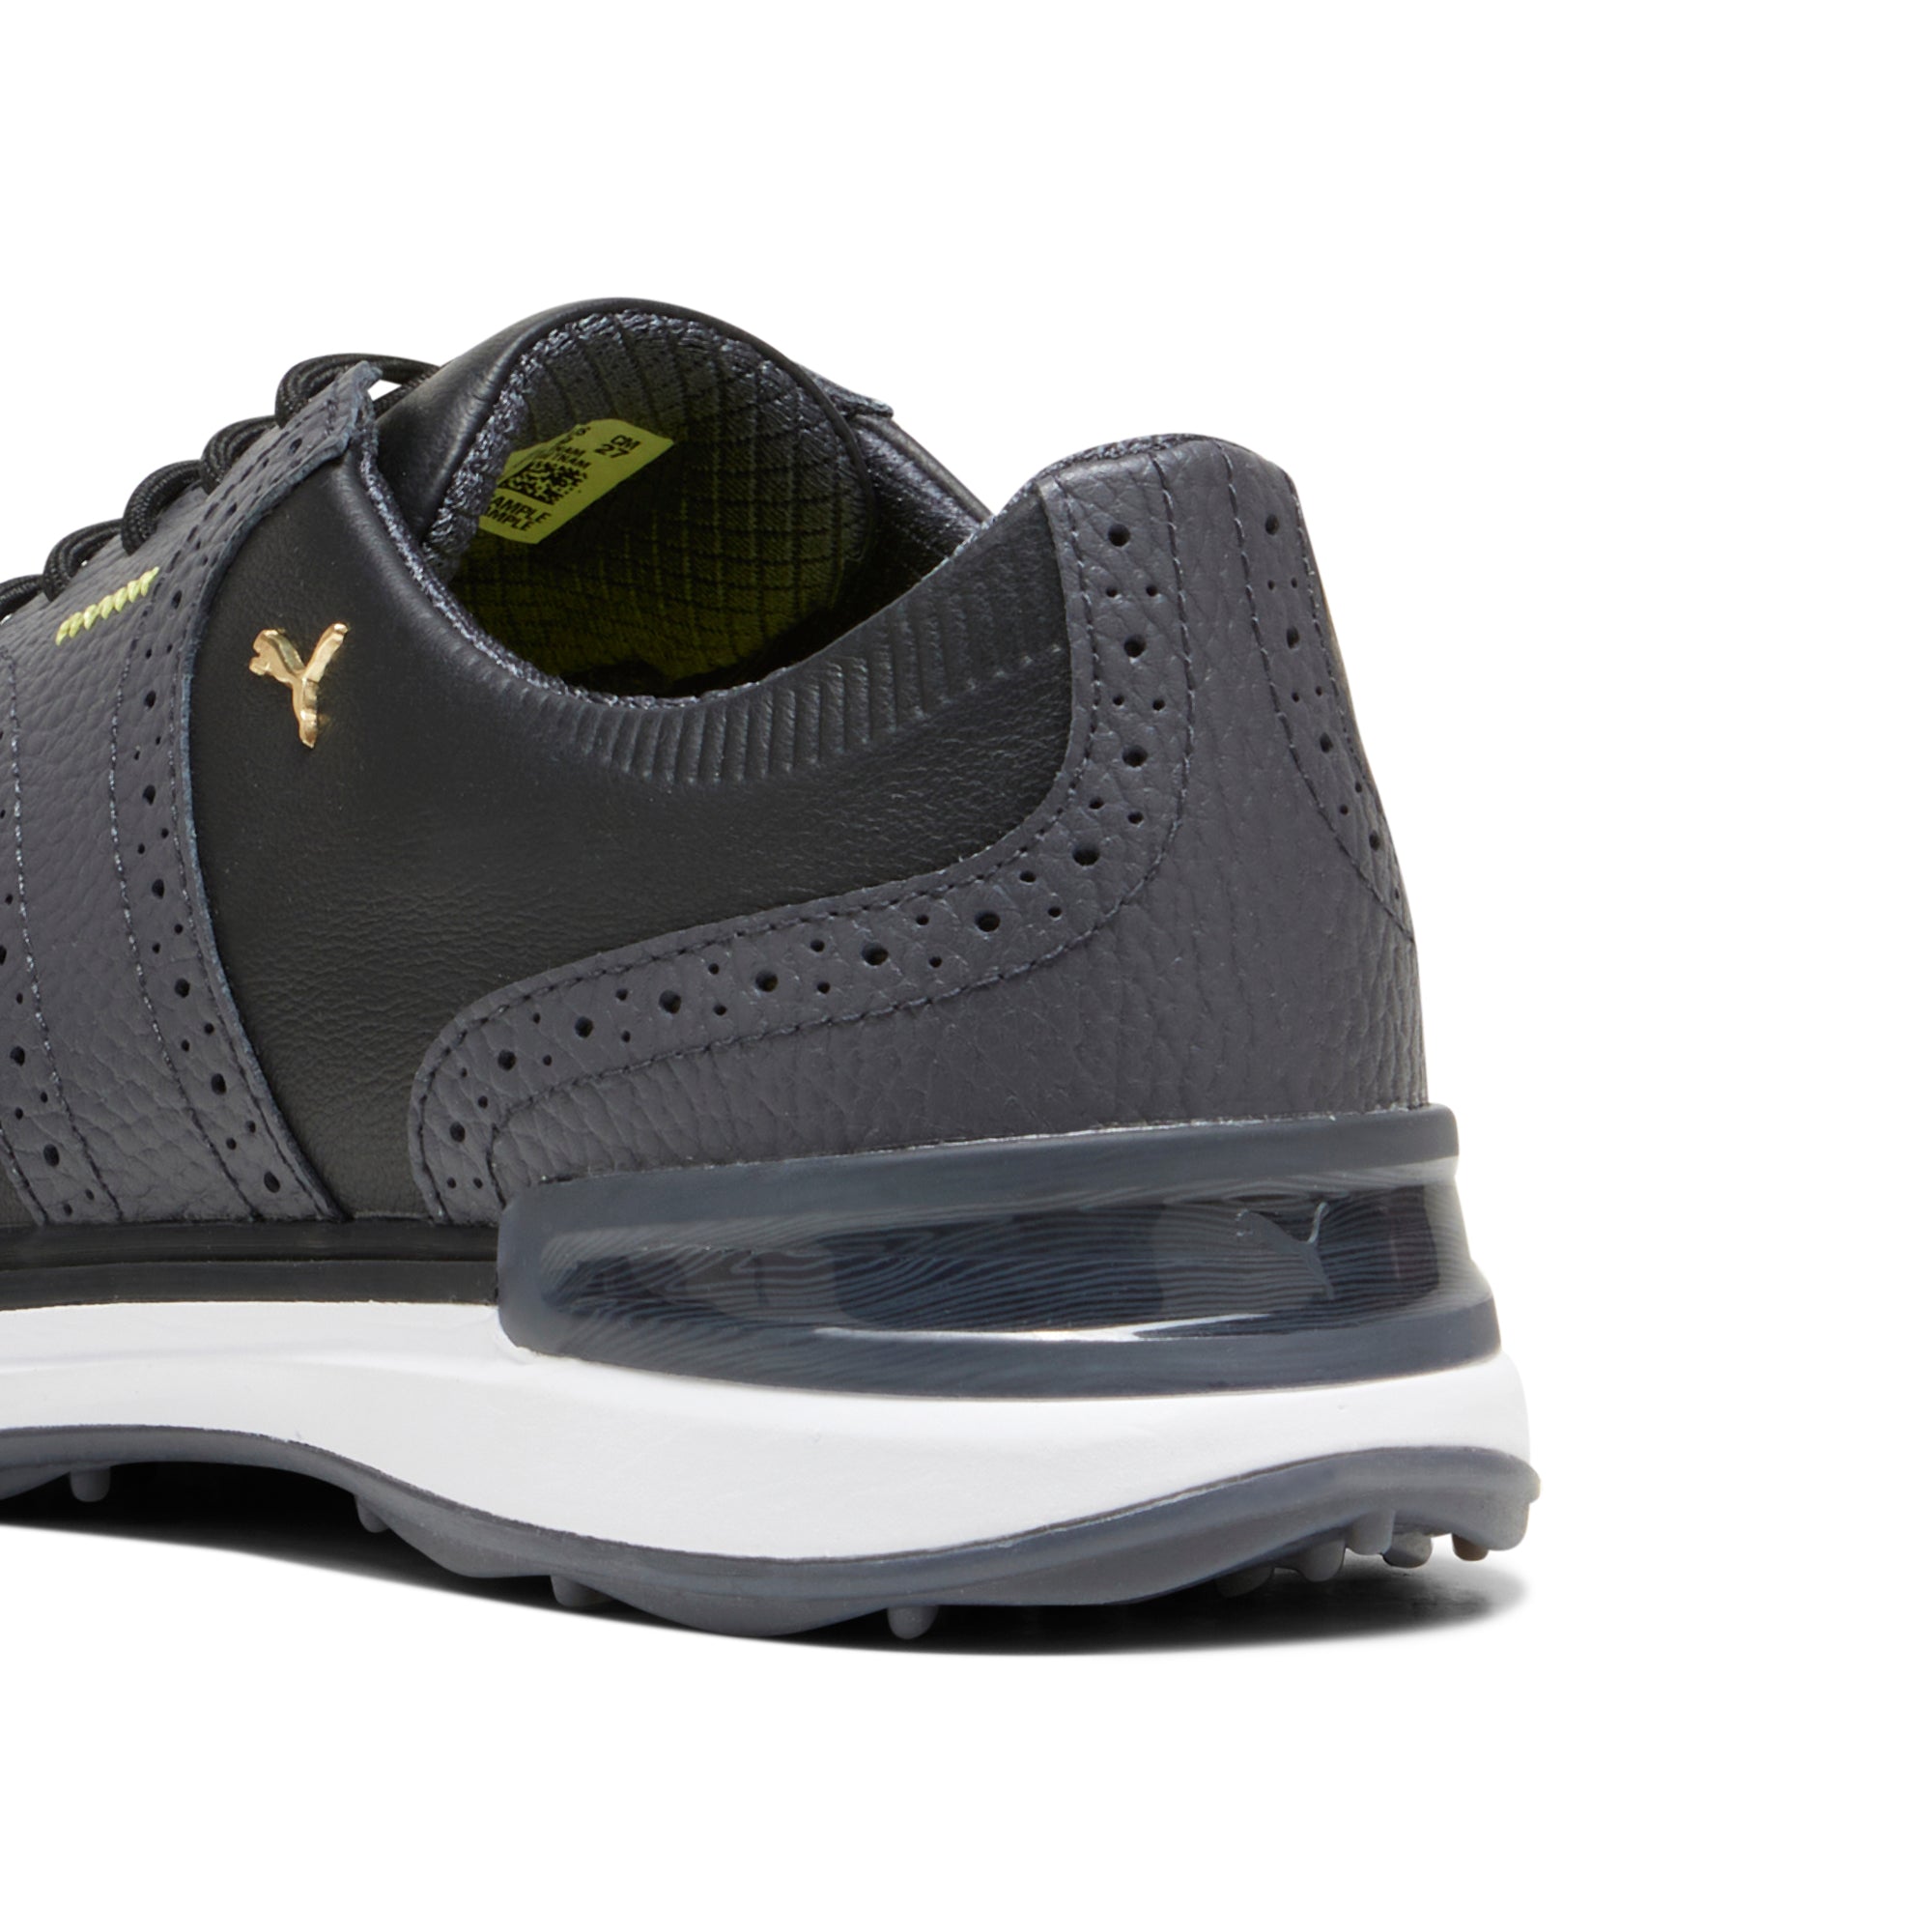 puma-avant-wingtip-golf-shoes-378824-strong-grey-puma-black-03